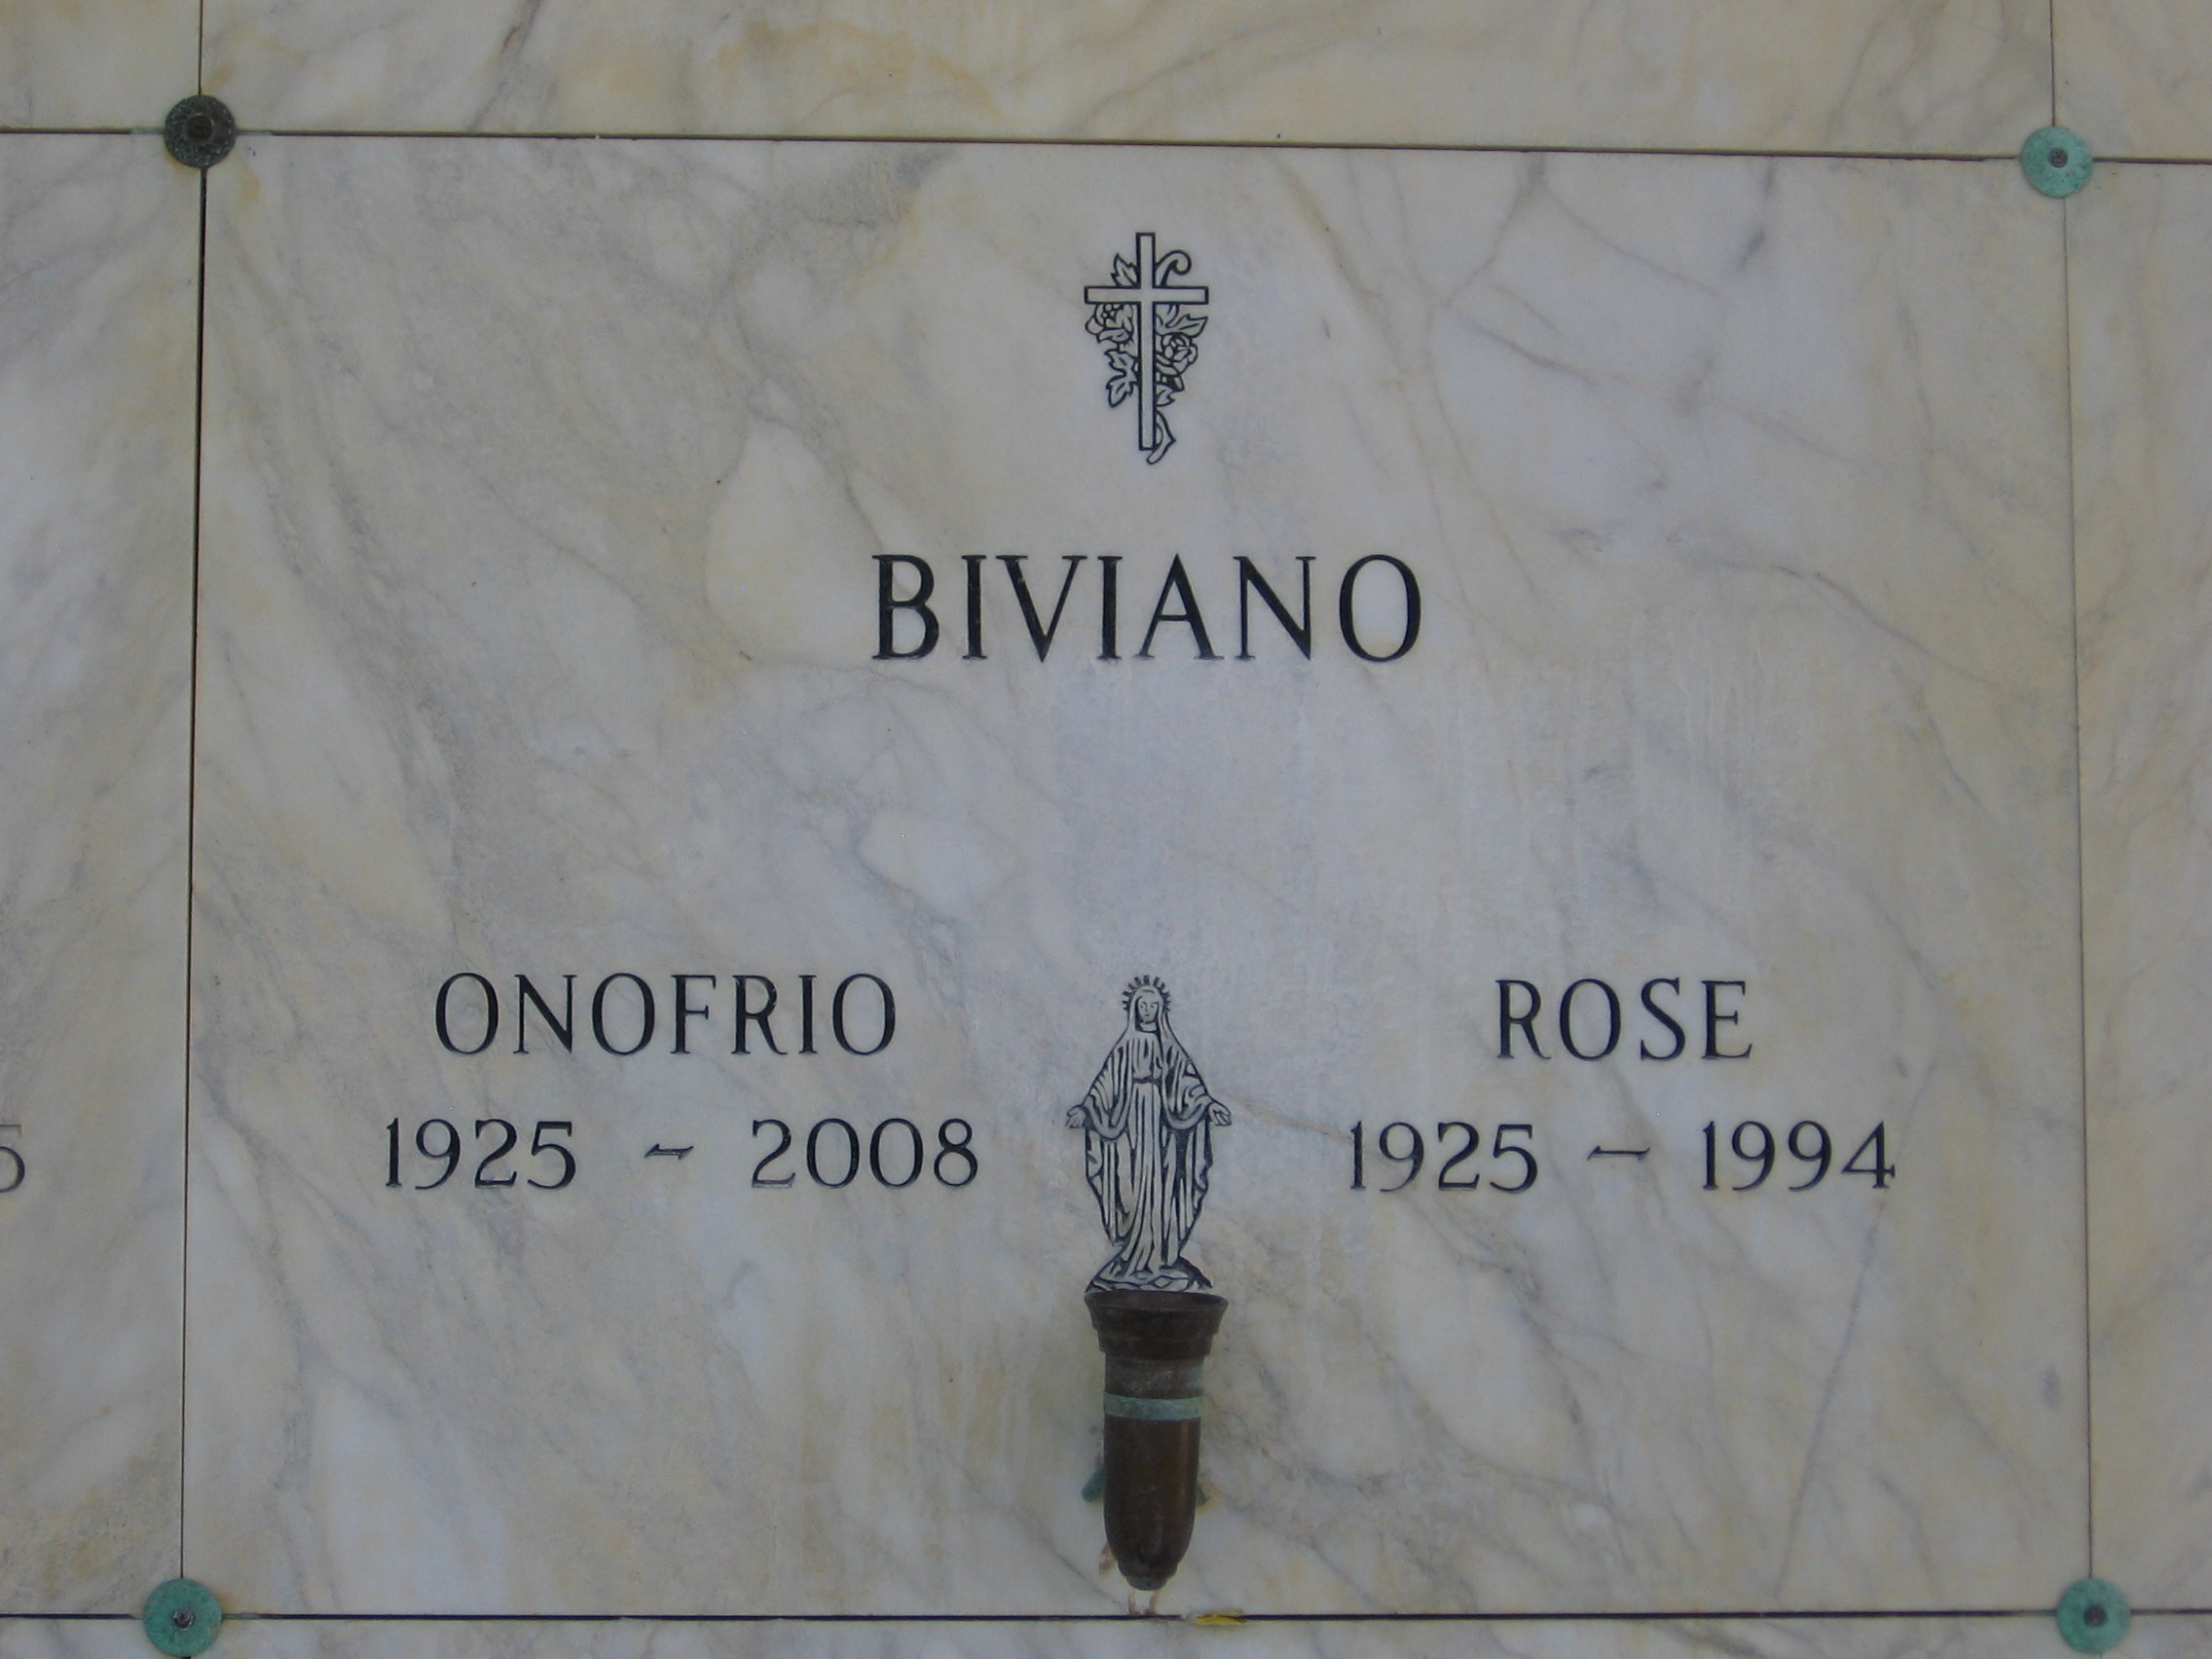 Rose Biviano